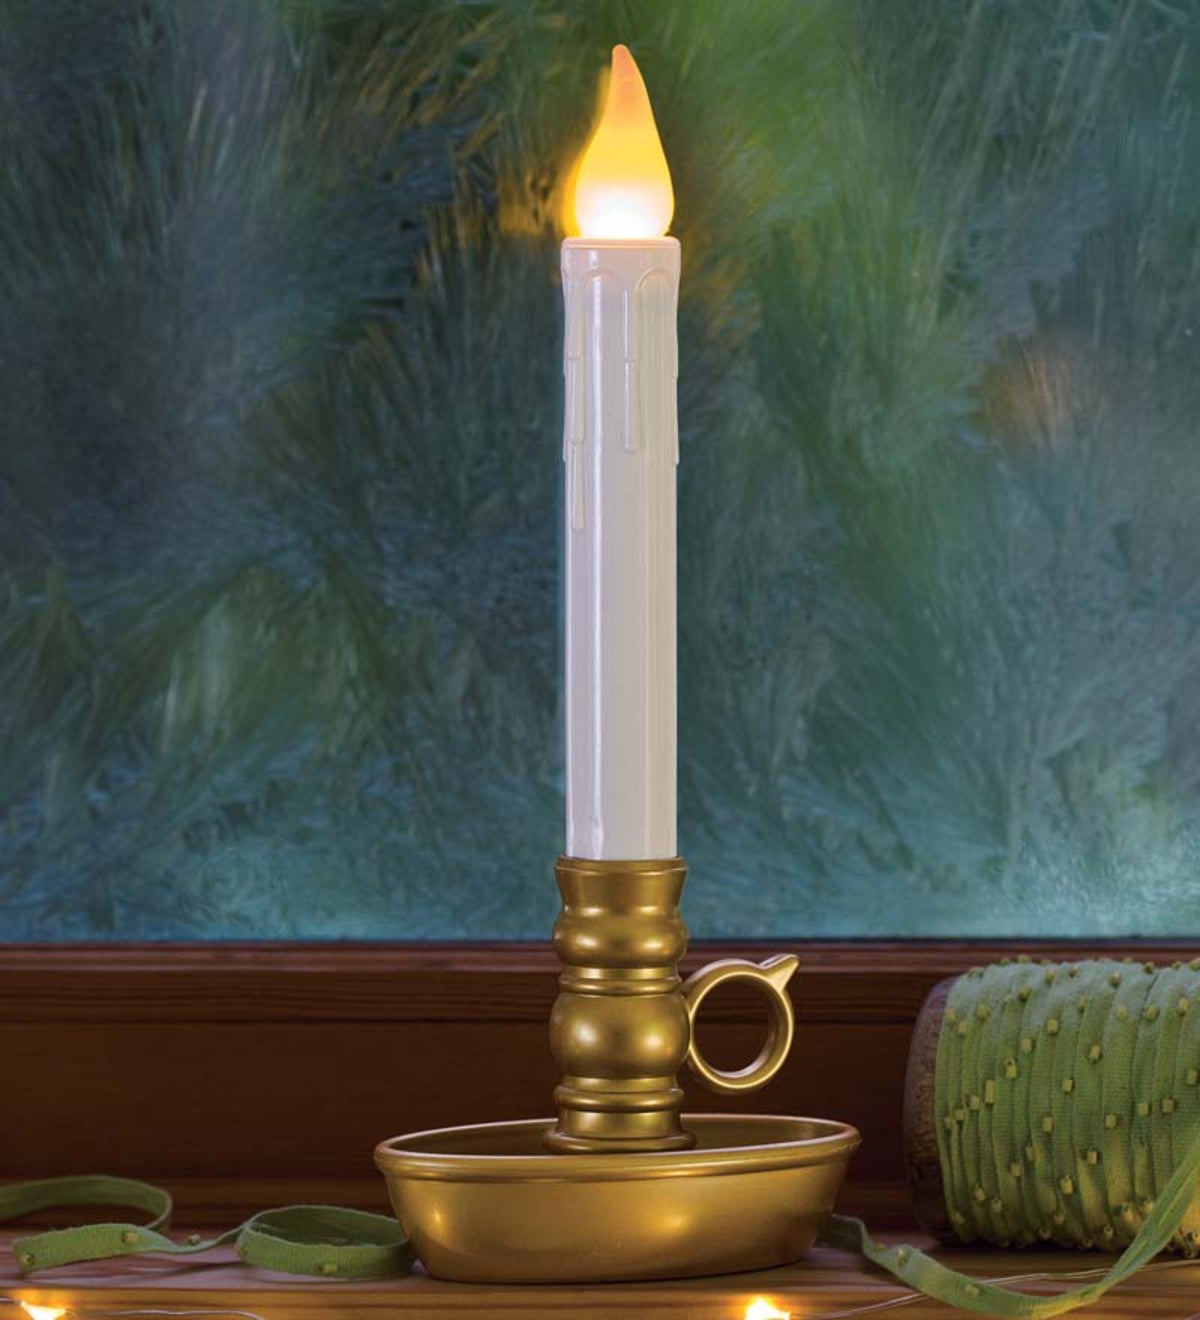 Single candle